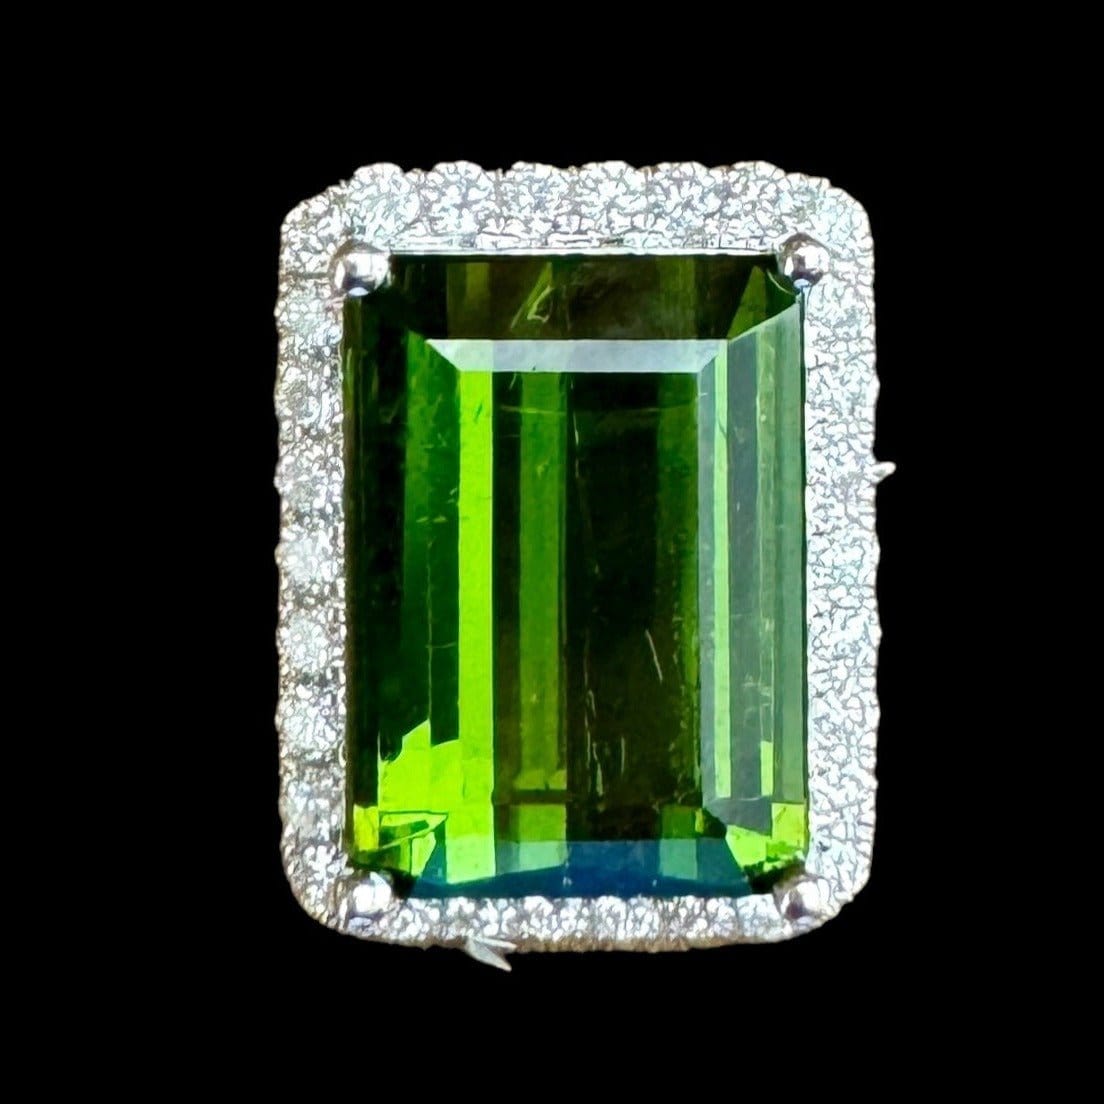 6.00ct "Golden Green" Emerald Cut Tourmaline & Diamond Ring set in 18K White Gold